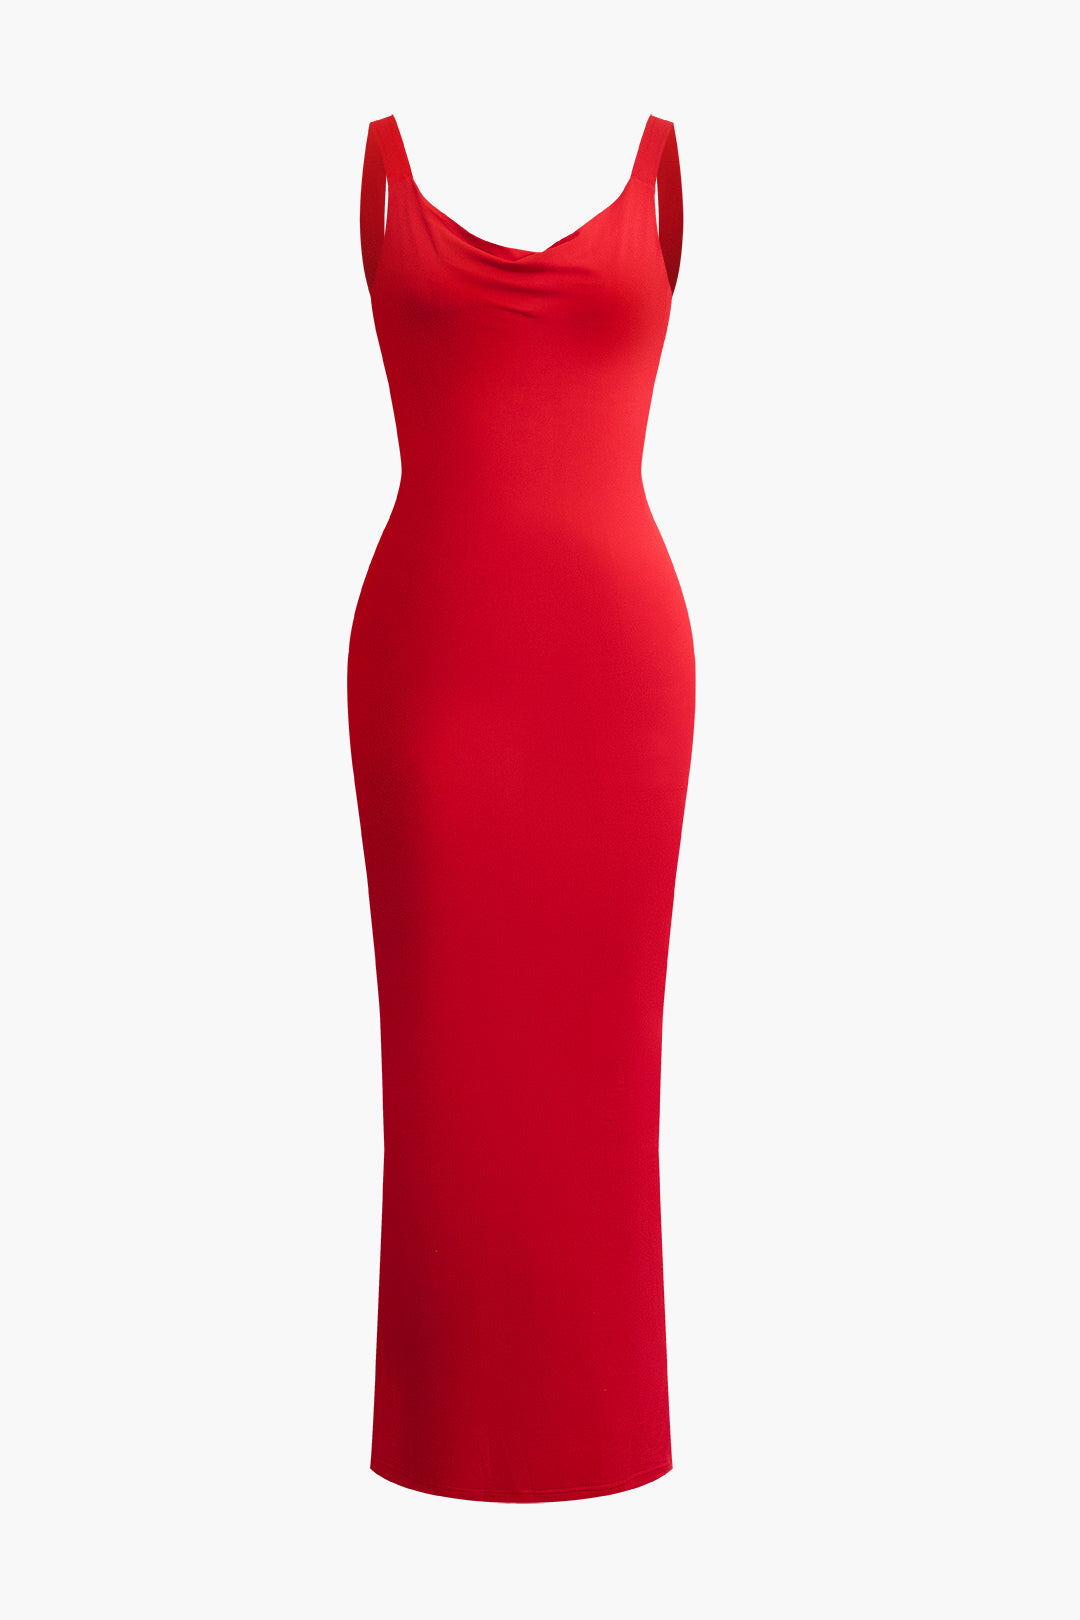 Cowl Neck Bow Detail Backless Sleeveless Maxi Dress